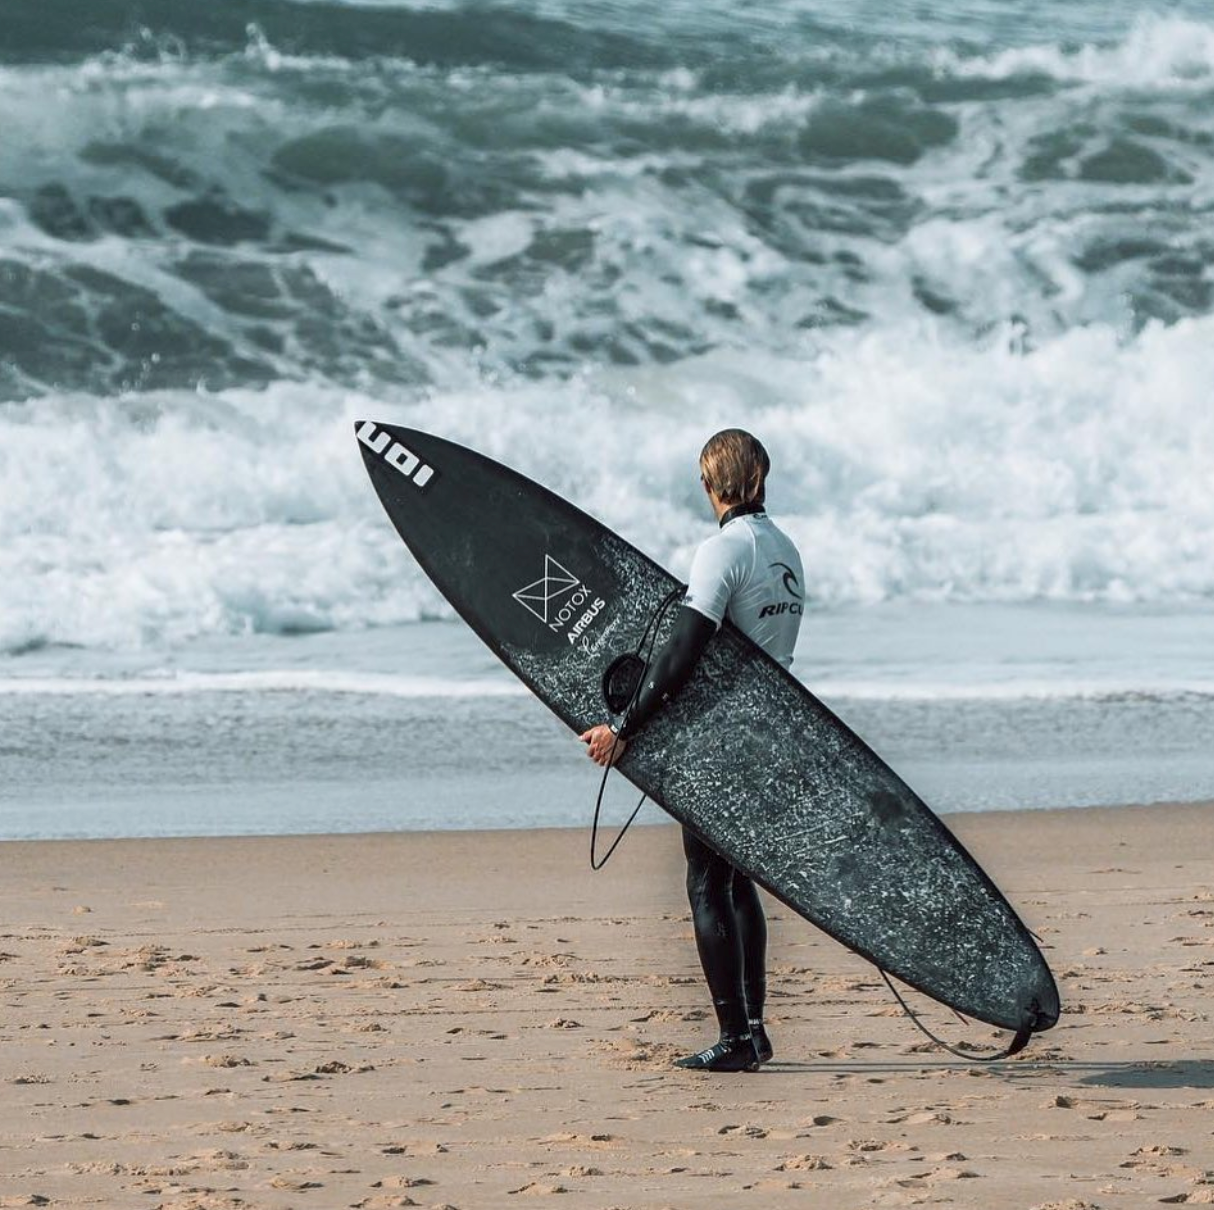 R-CARBON: eco-friendly carbon surfboards?